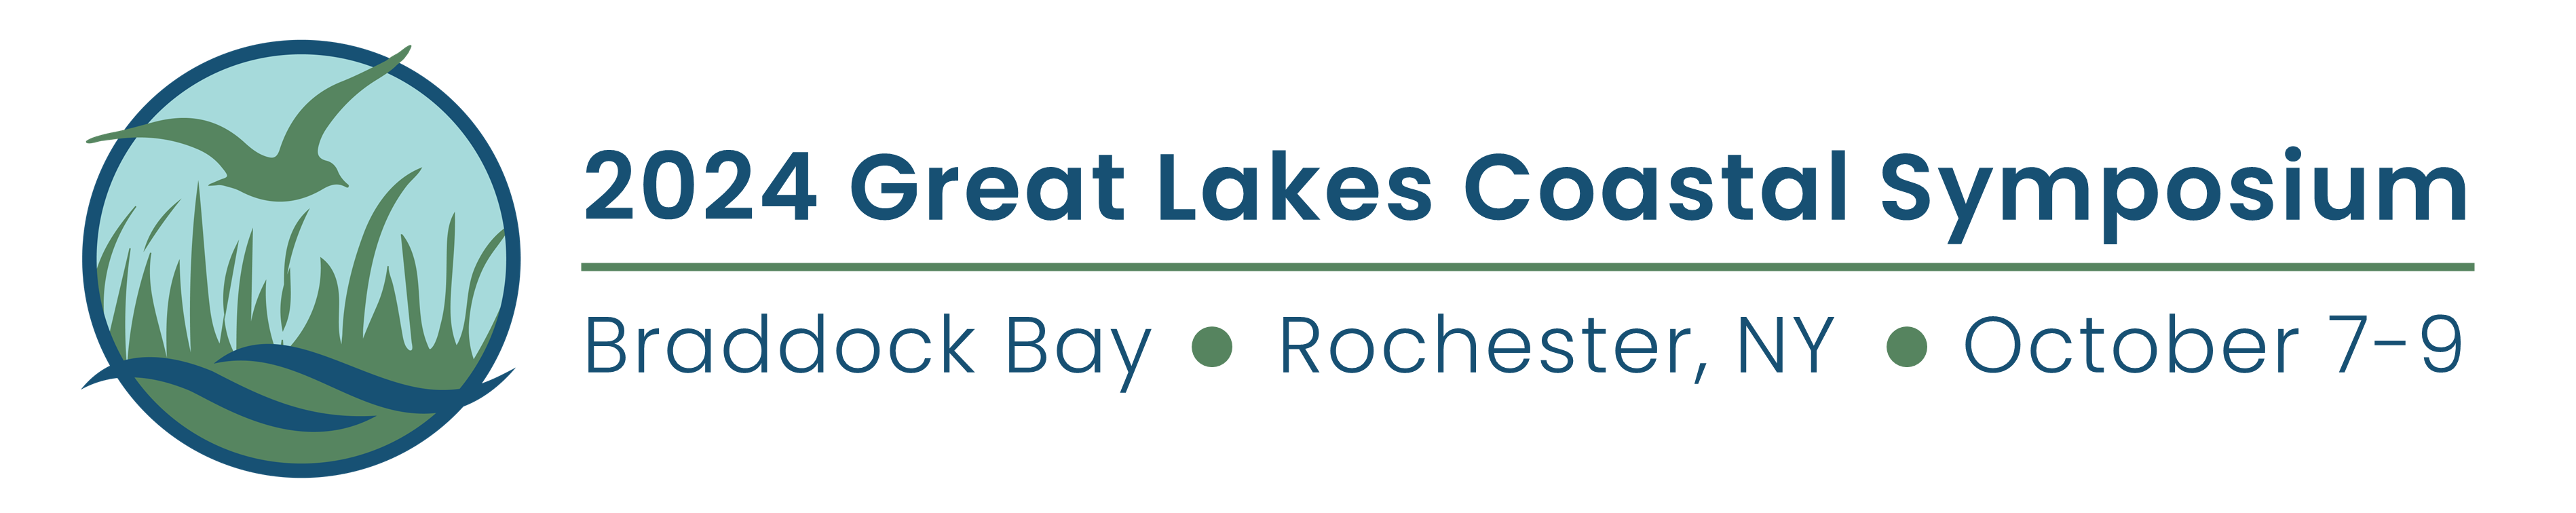 2022 Great Lakes Coastal Symposium St. Marys River Sault Ste. Marie, MI September 19-21, 2022